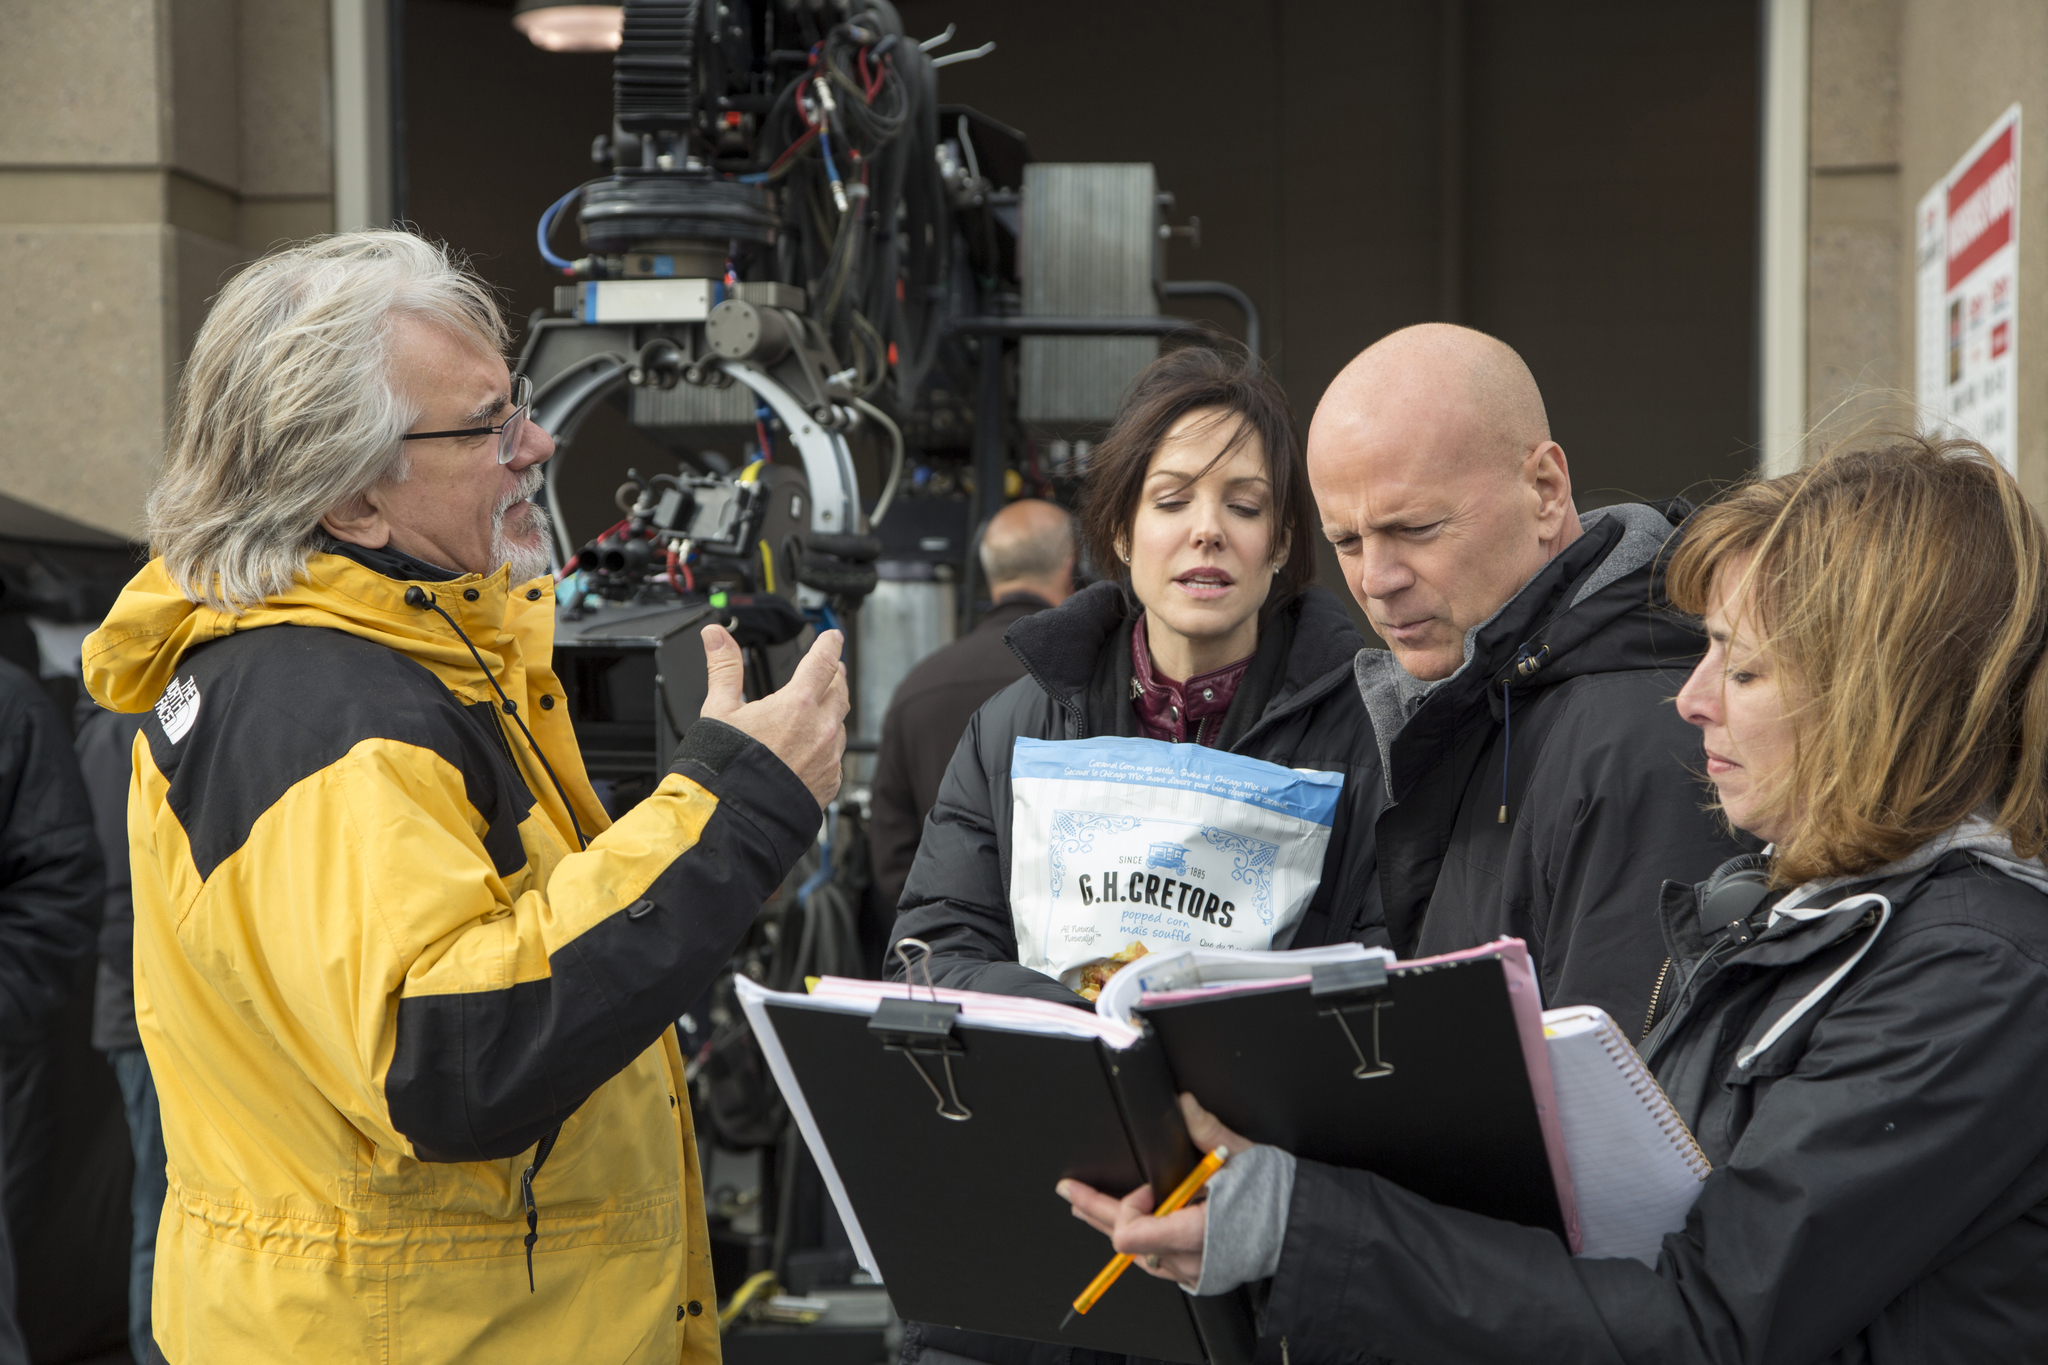 Bruce Willis, Mary-Louise Parker and Dean Parisot in Rizikinga Erzinti Diedukus 2 (2013)